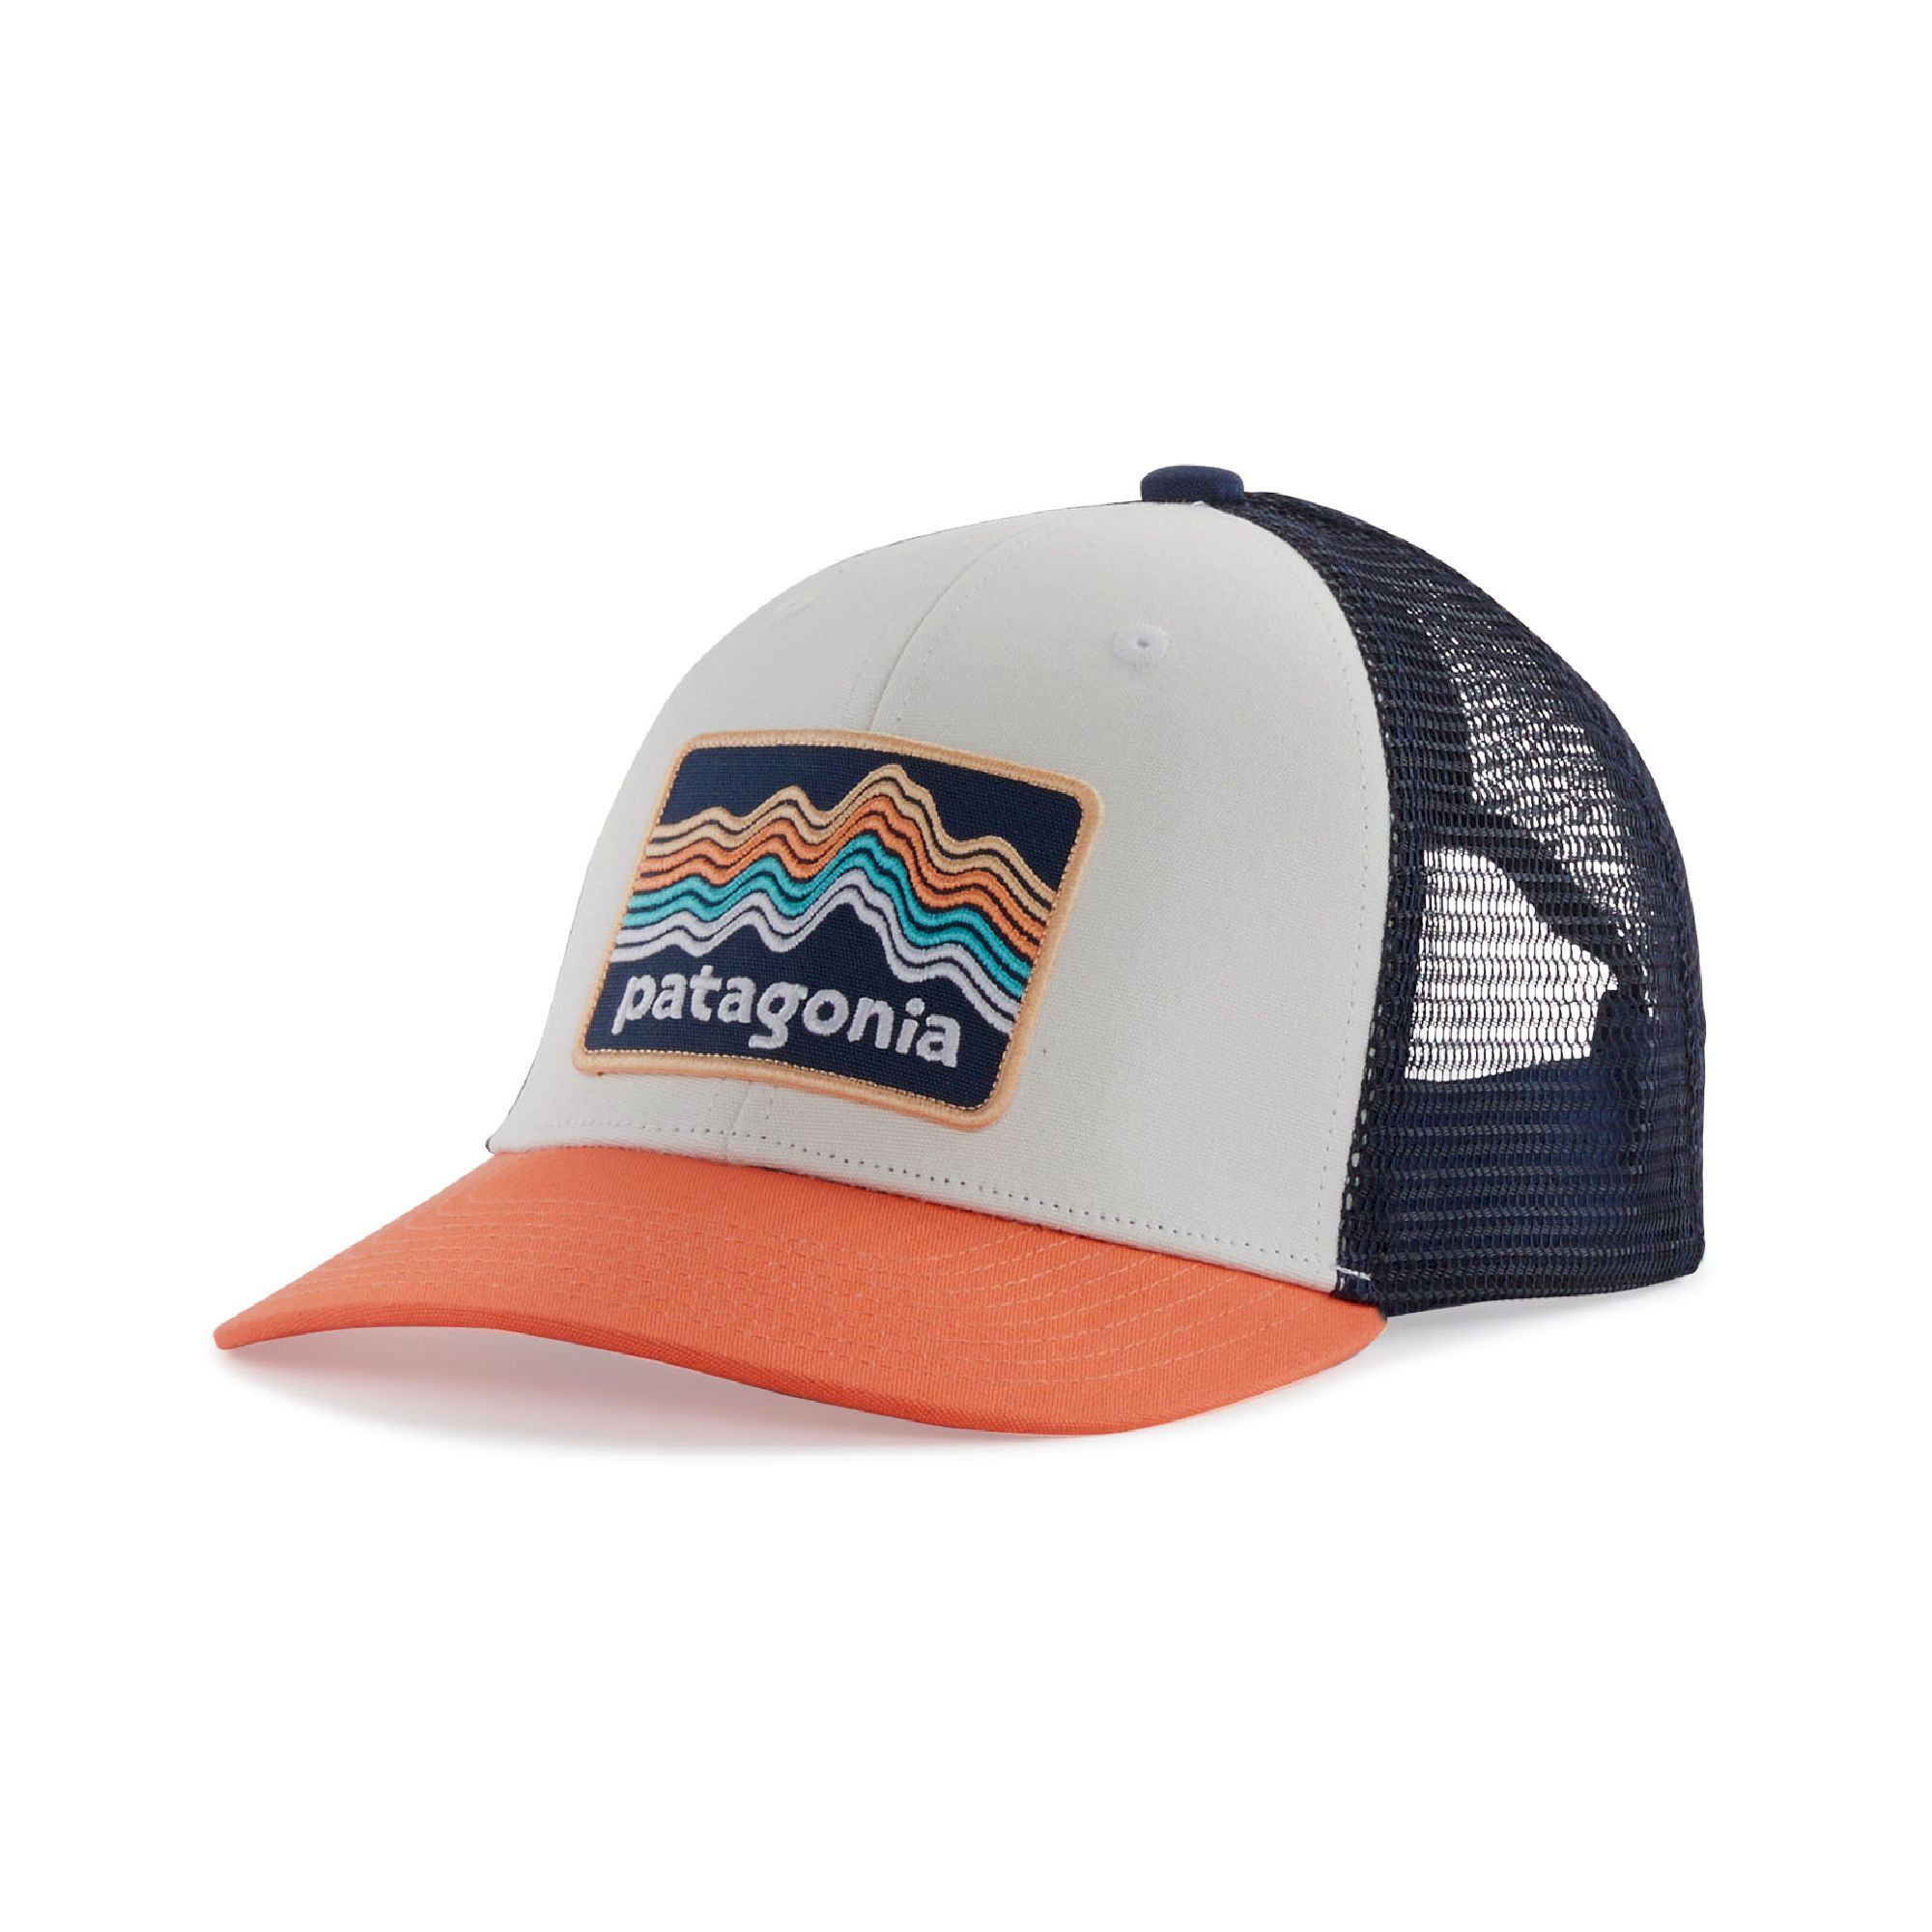 Patagonia K's Trucker Hat - Cap - Kinder